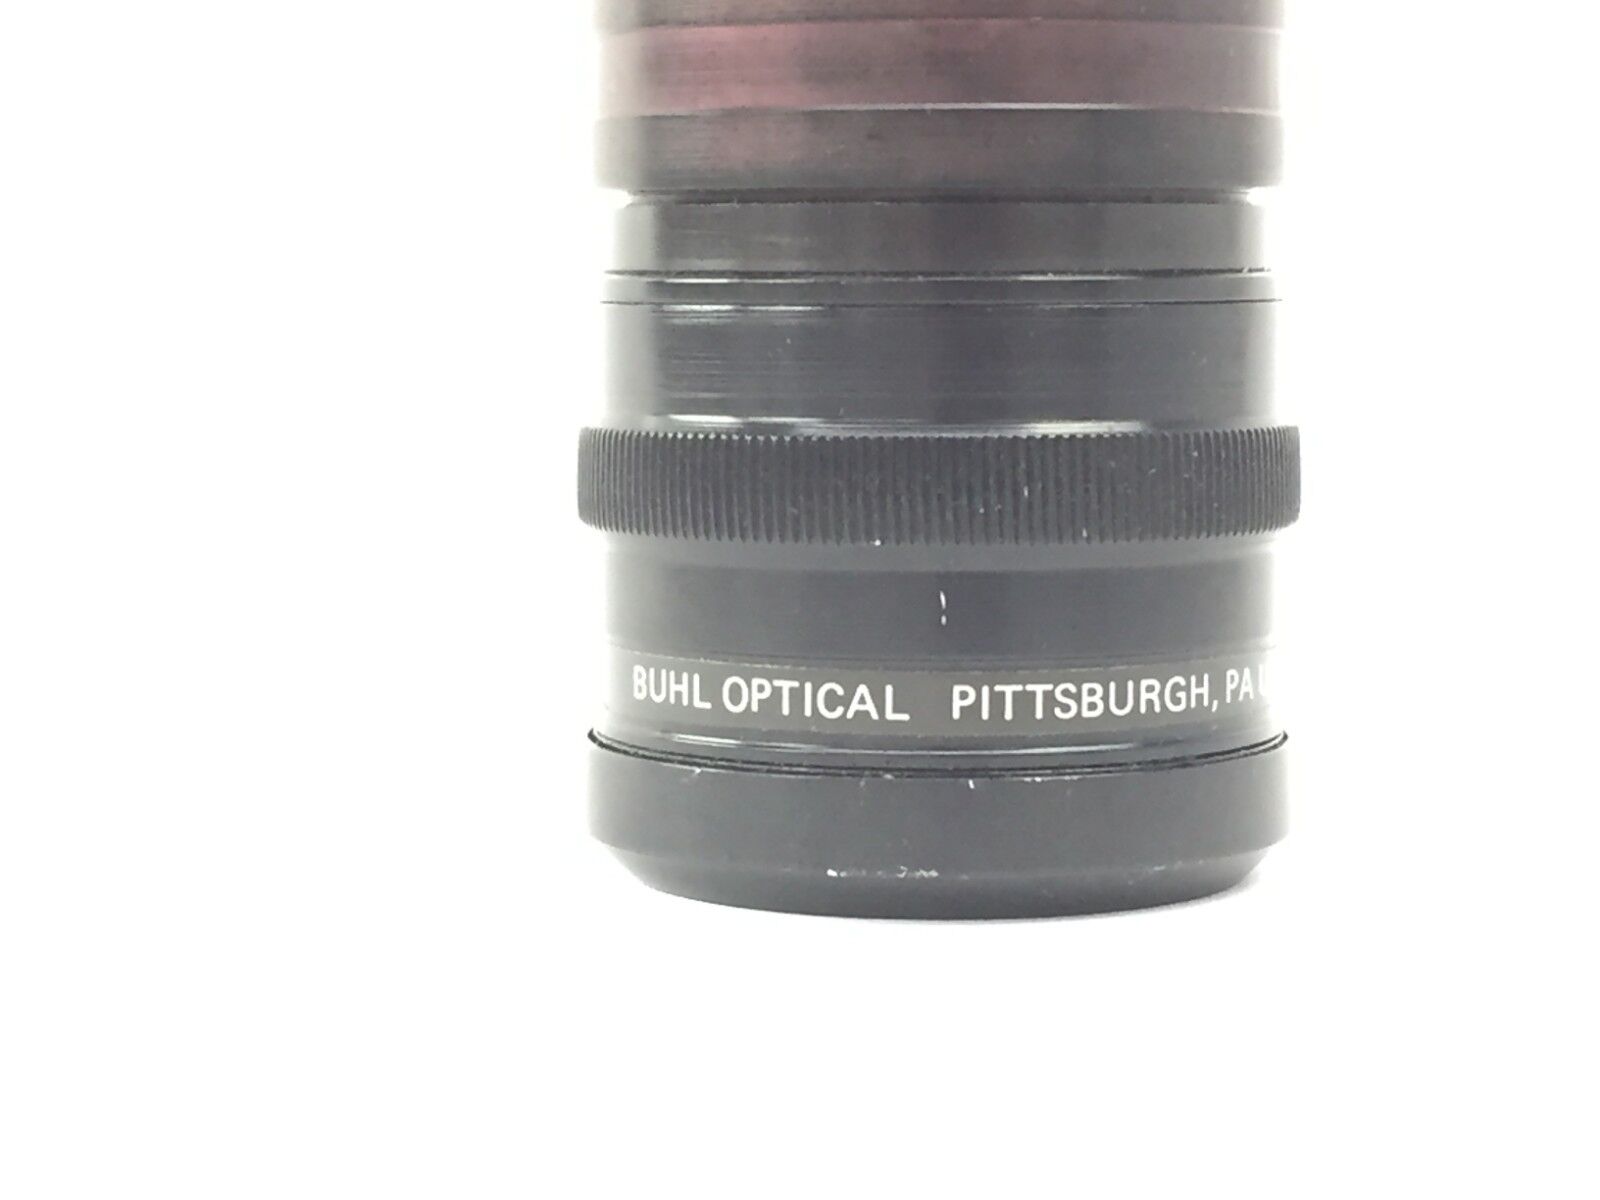 Buhl Optical 5.8"-8.4" (147mm-213mm) VFL f:4.3 133-060